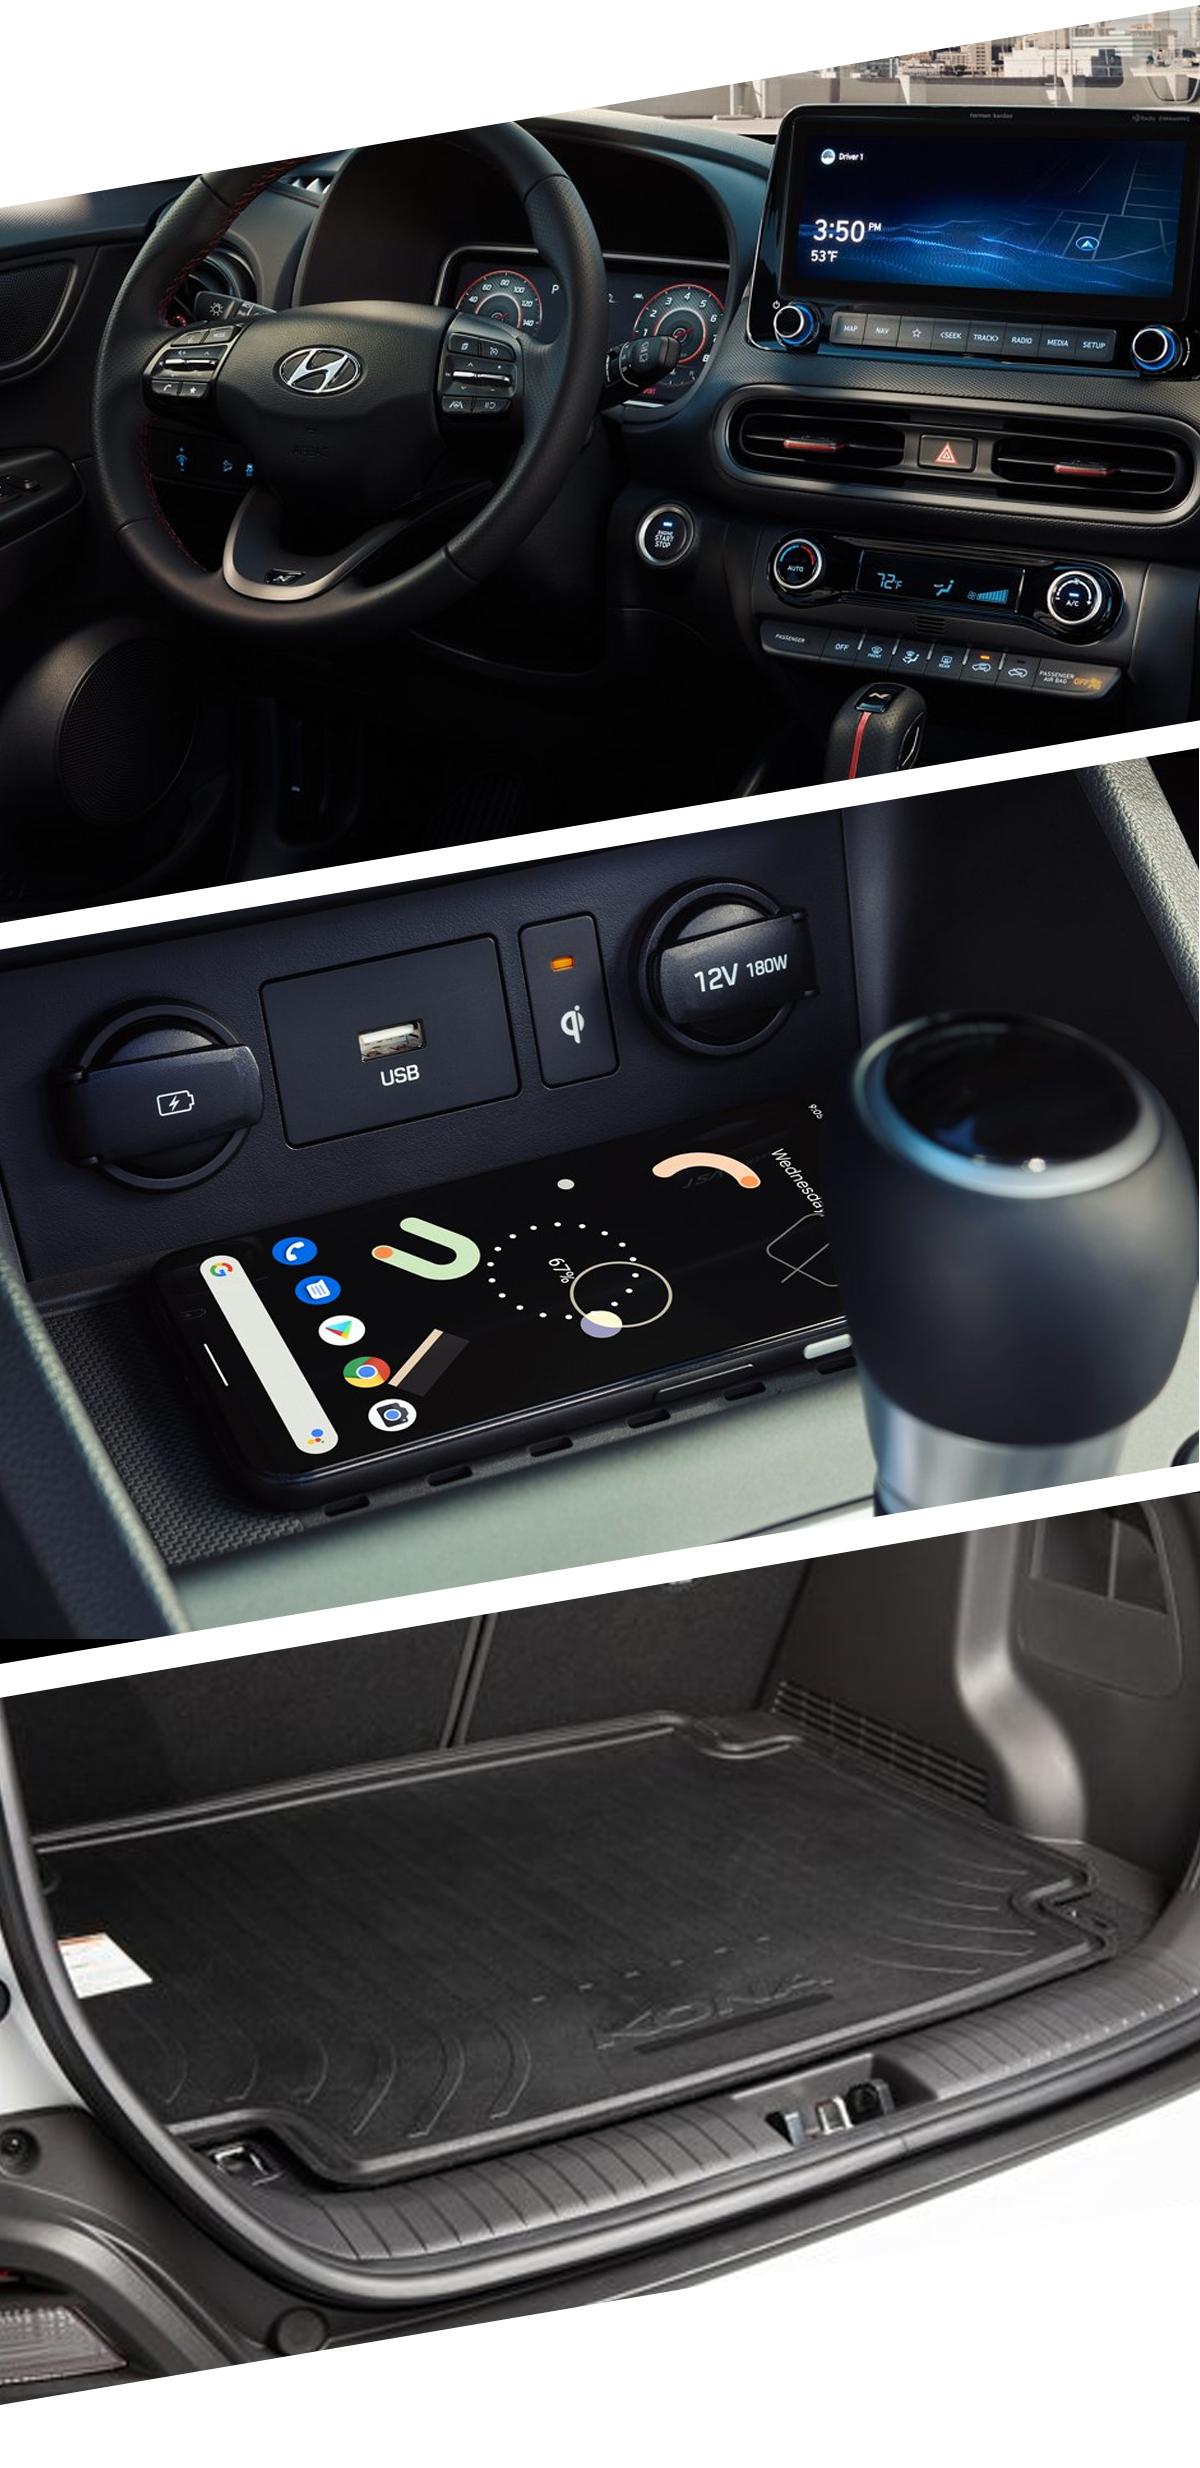 2021 Hyundai Kona Interior Images